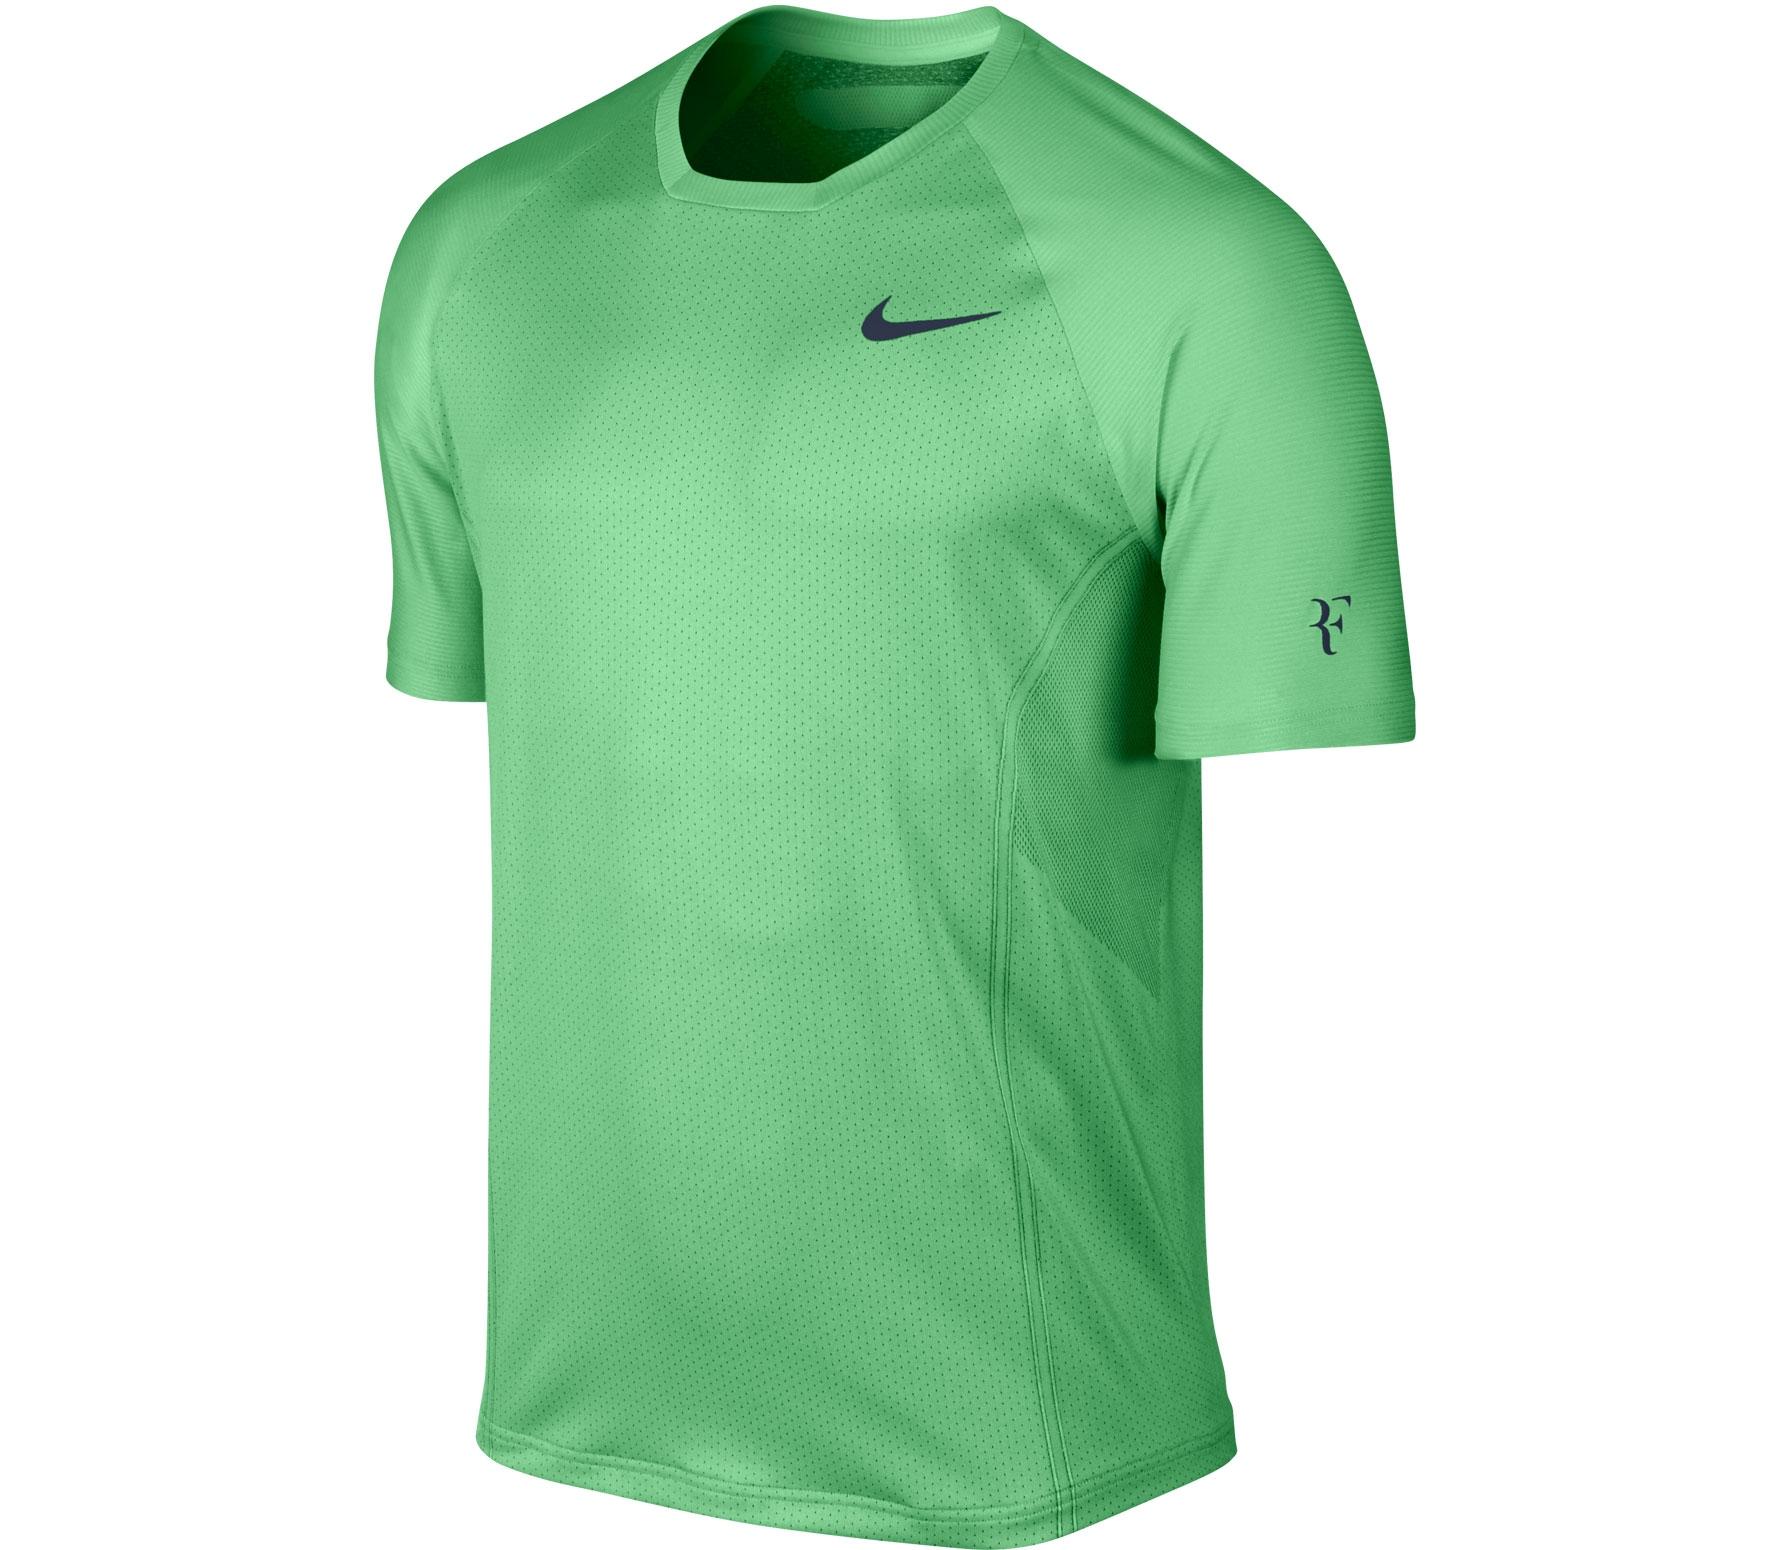 Foto Nike - Camiseta Tenis Hombre Premier Roger Federer Crew - SU13